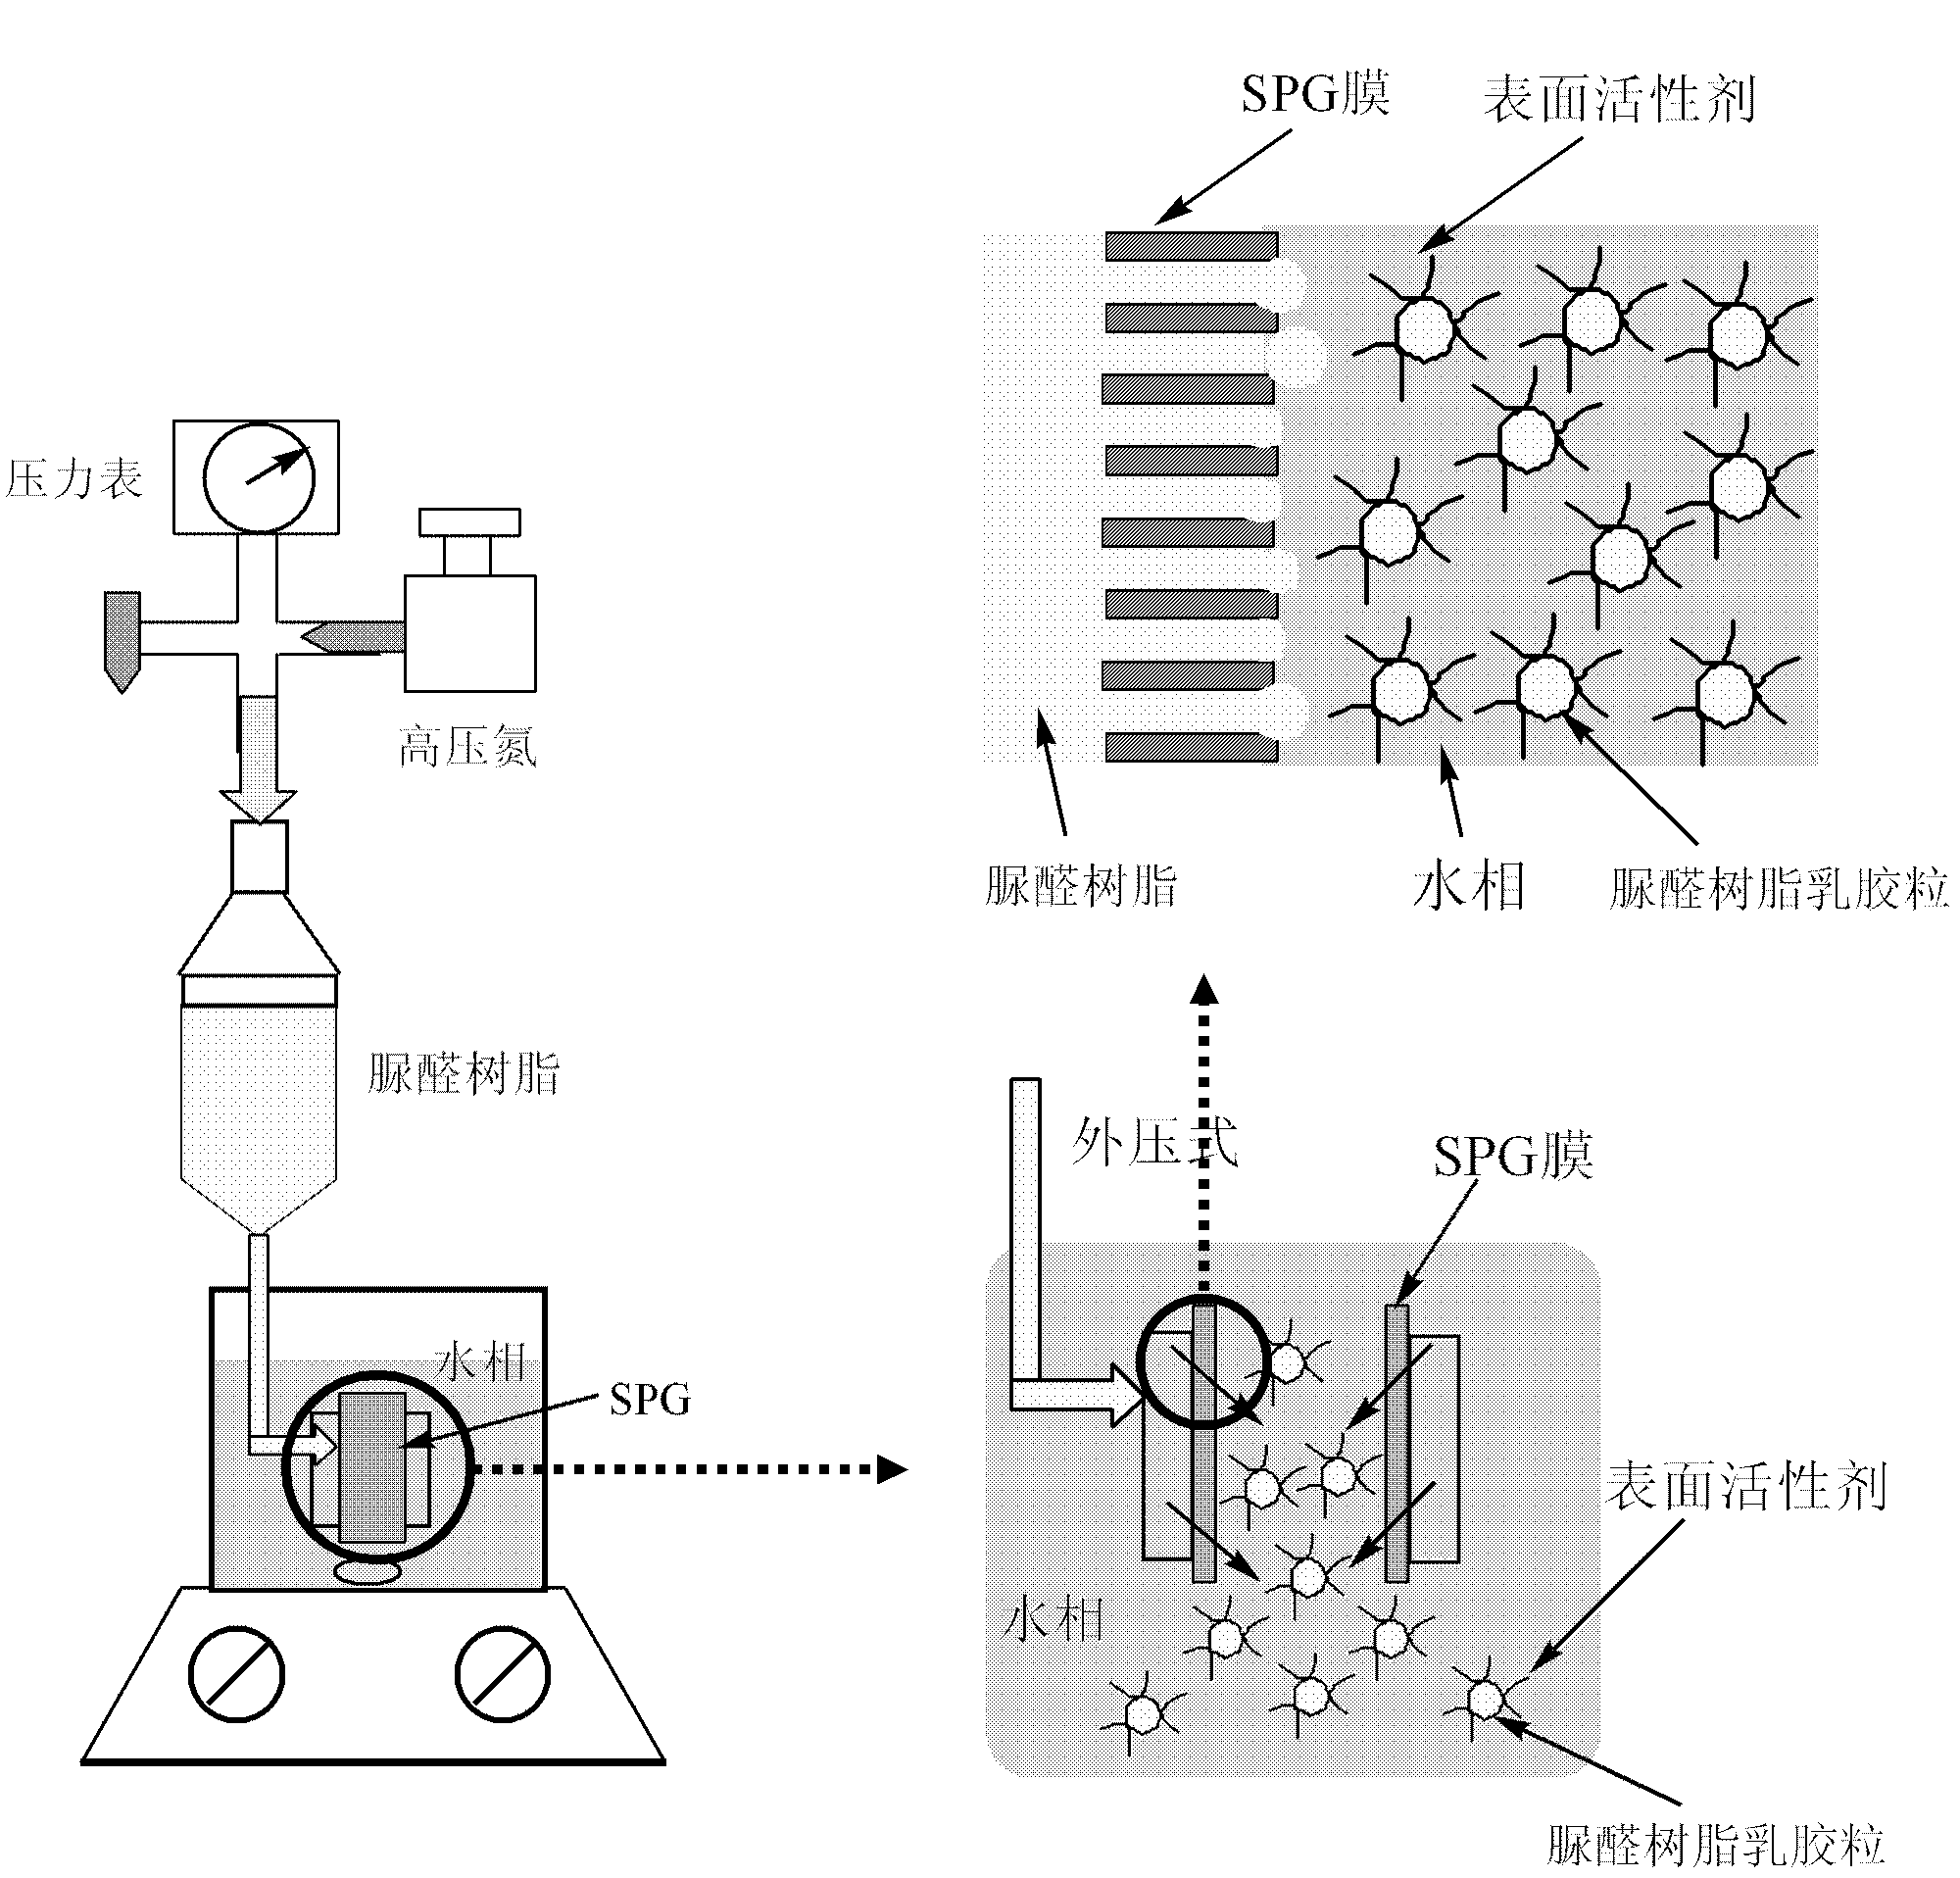 Preparation method of monodisperse large size carbon ball